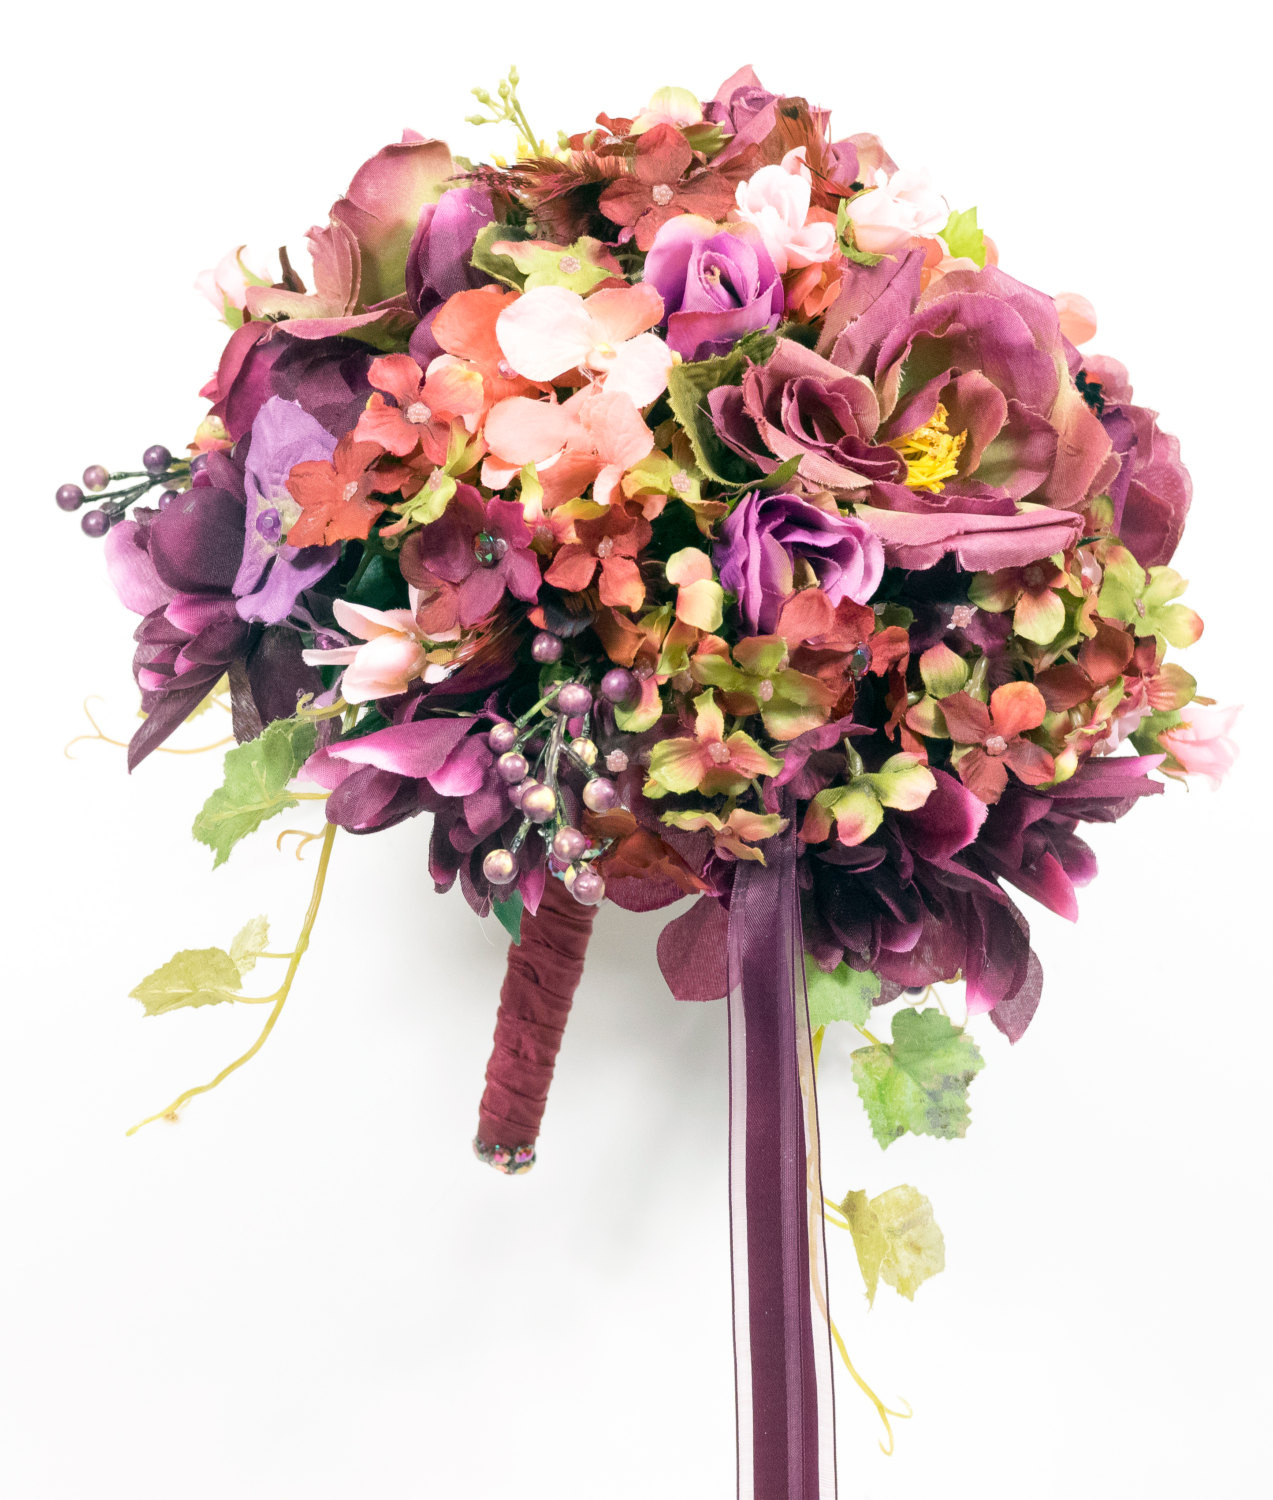 Silk Wedding Flower Packages
 SILK FLOWERS WEDDING bouquets packages by GailsForeverFlowers